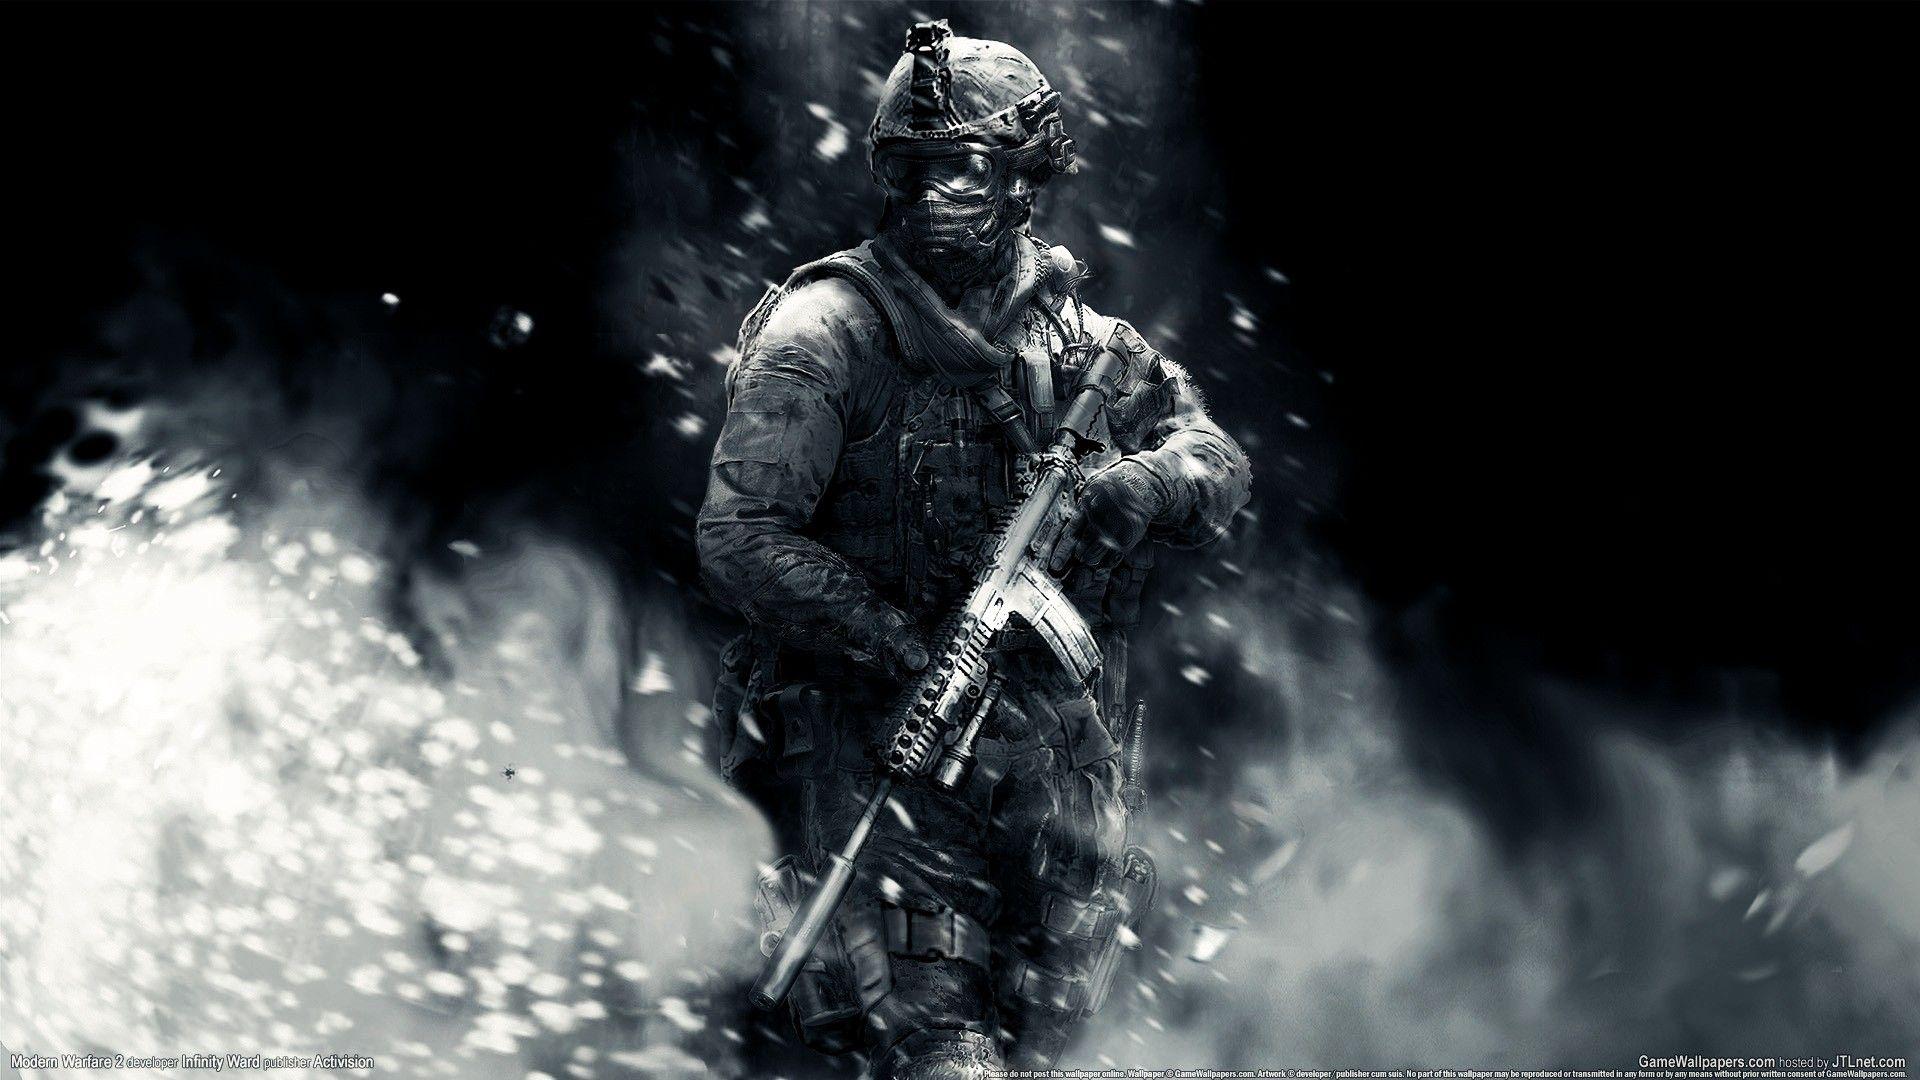 FHDQ Wallpaper: Call Of Duty Wallpaper, Call Of Duty Photo